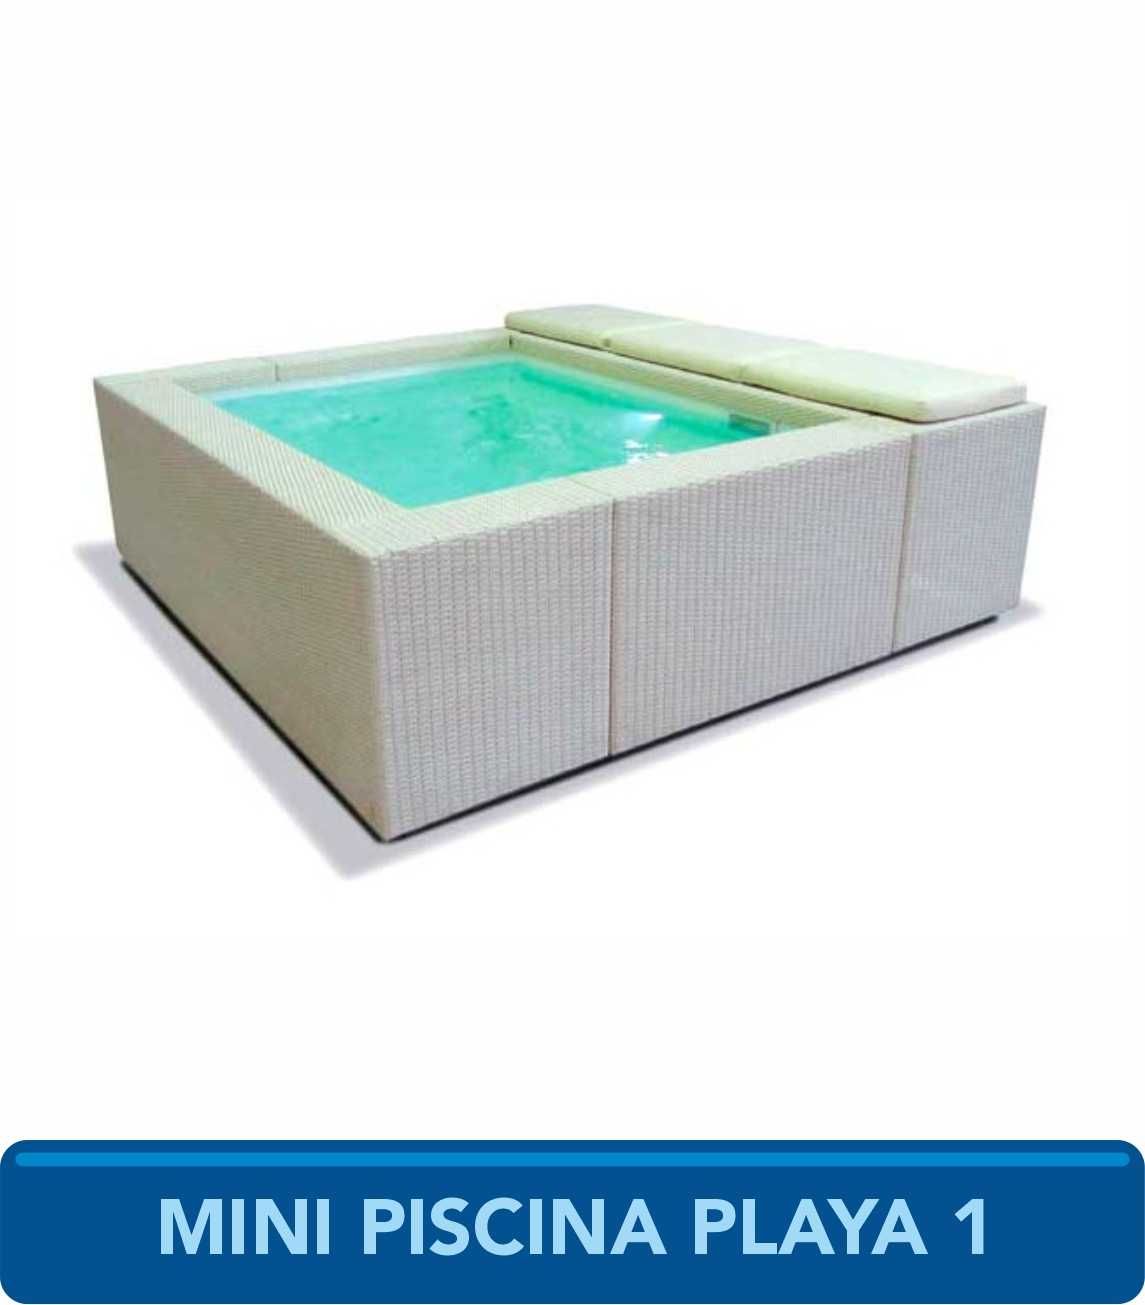 Mini Piscina Playa 1 Laghetto 220x220x70cm